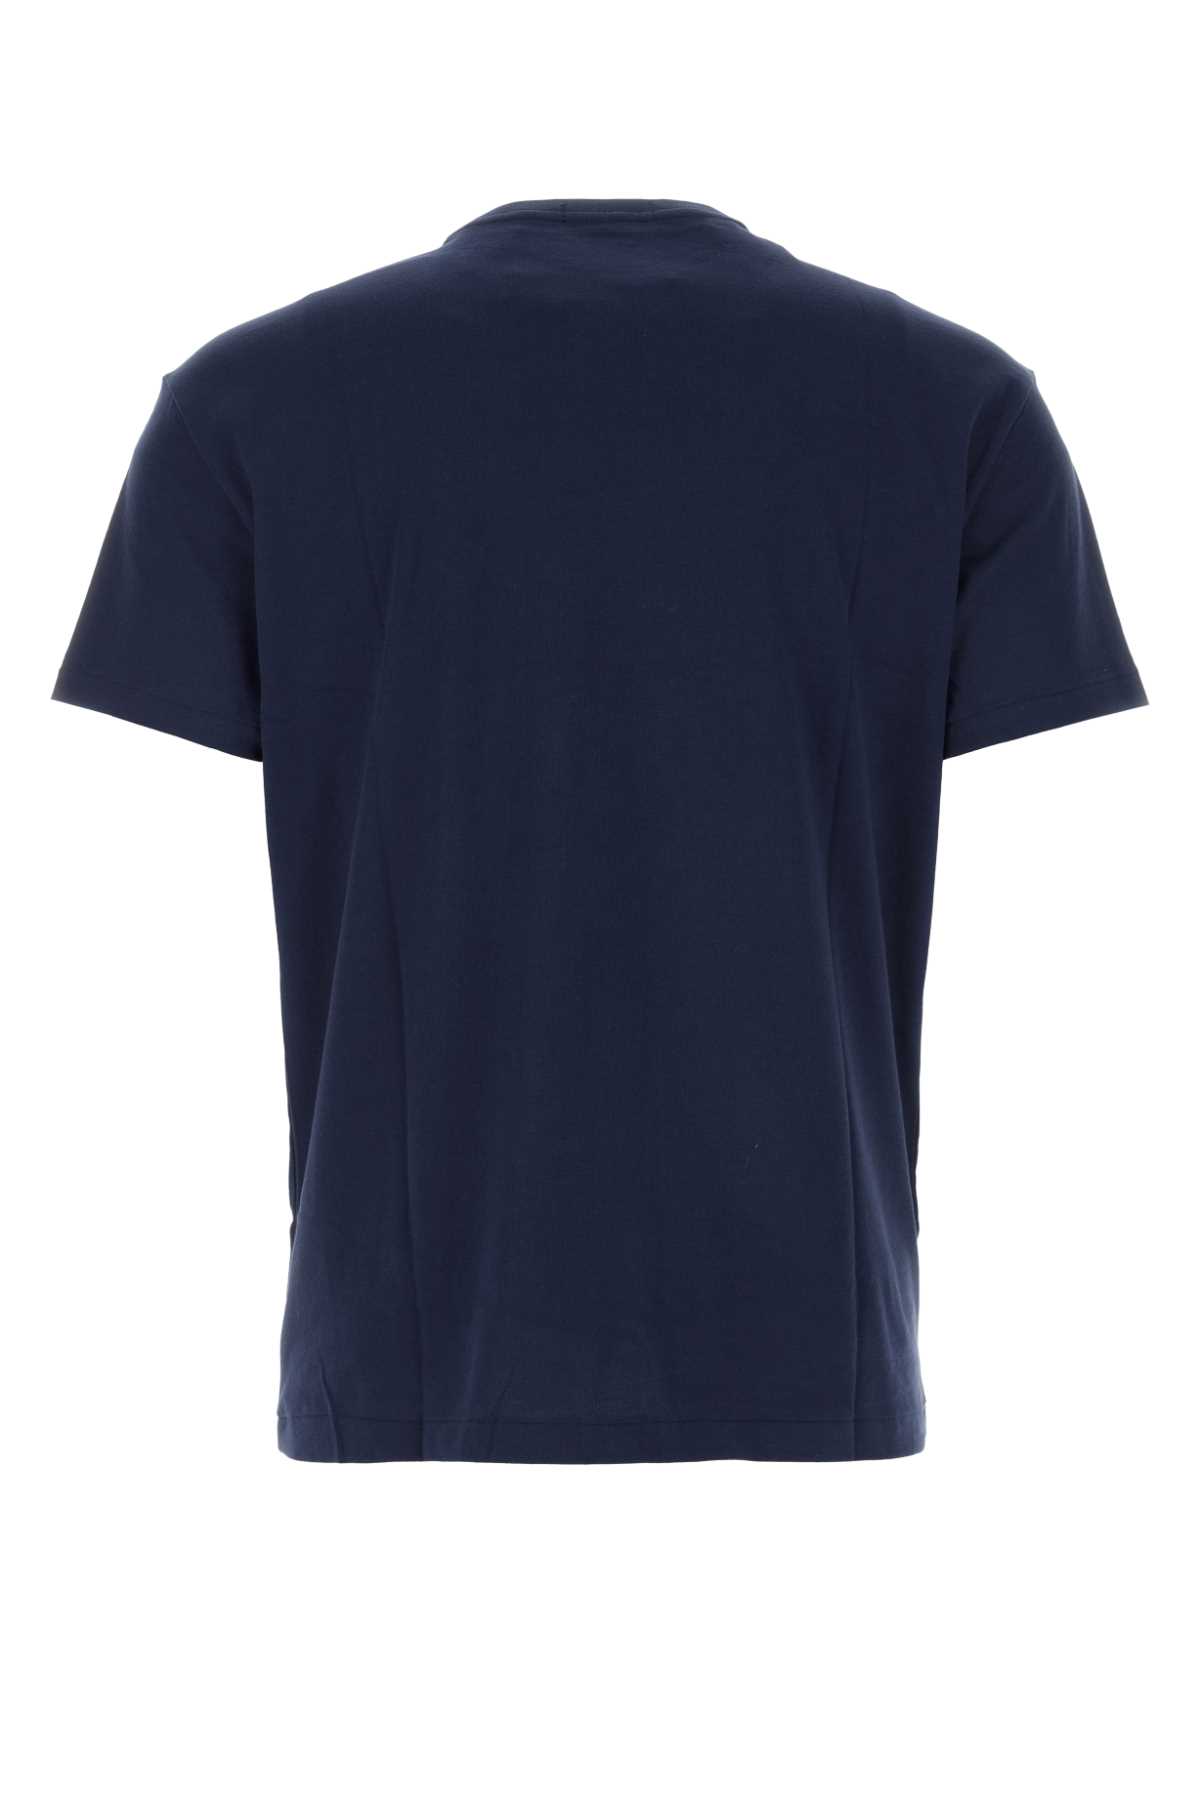 Polo Ralph Lauren Navy Blue Cotton T-shirt In Spring Navy Heather